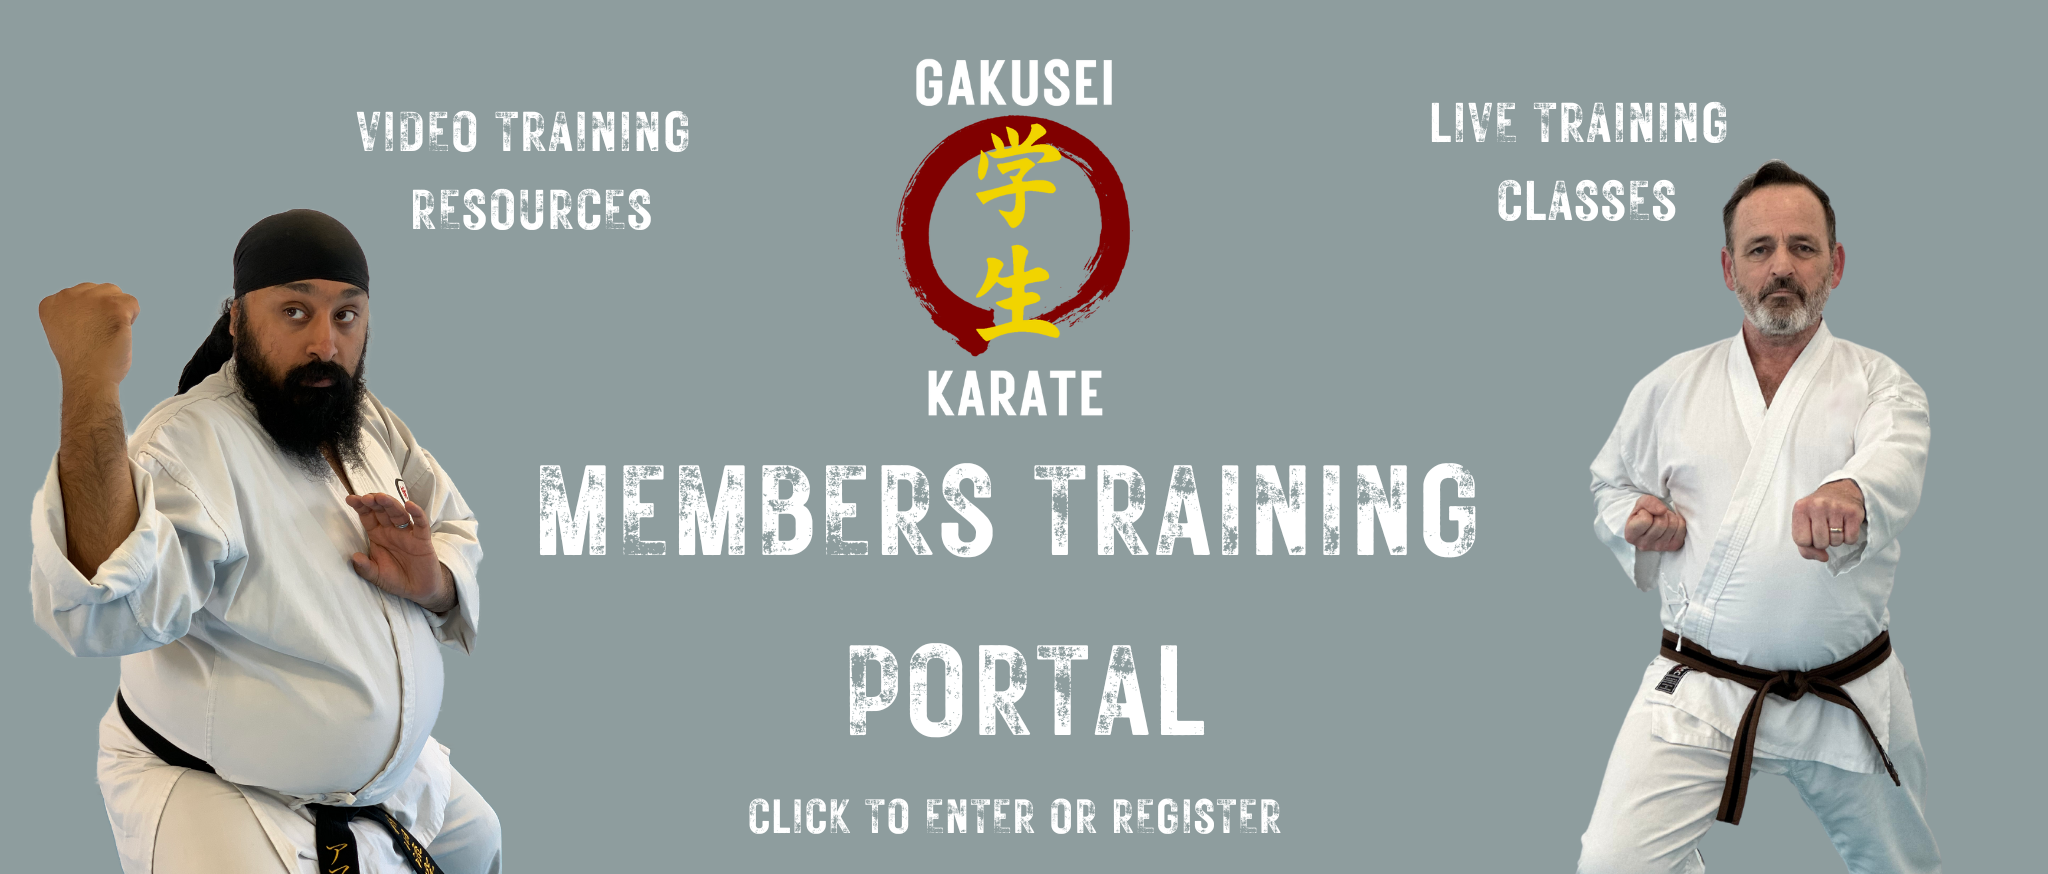 Gakusei Karate Members video training portal banner